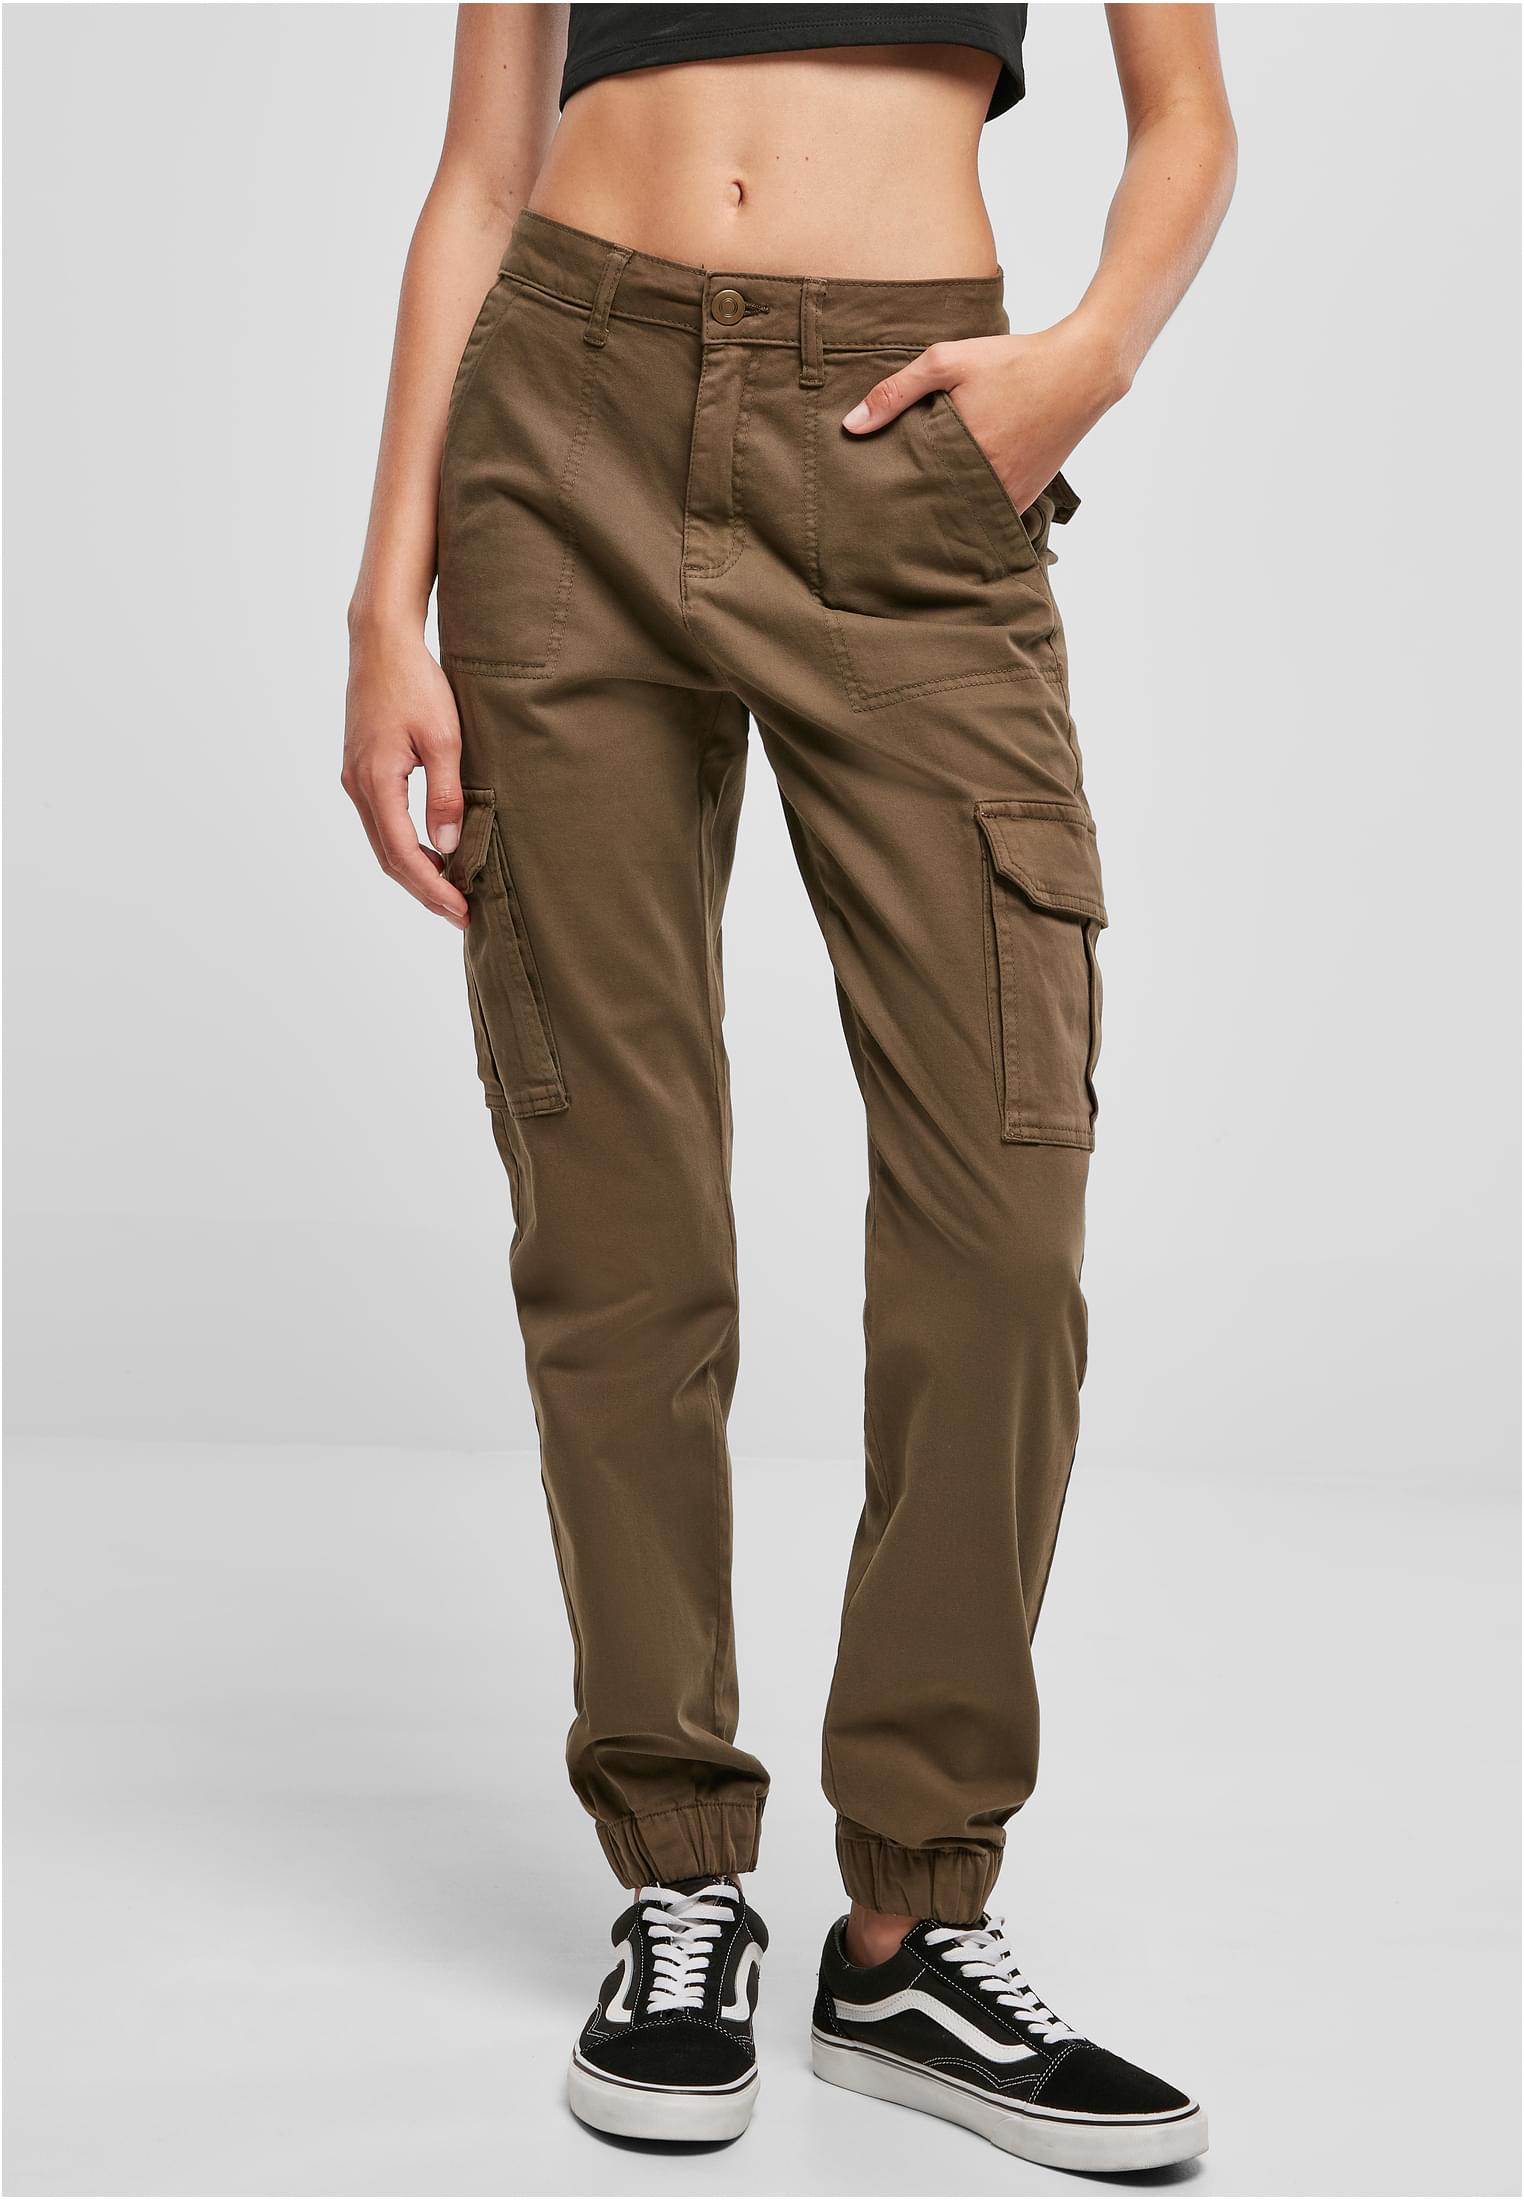 UrbanClassics Ladies Cotton Twill Utility Pants